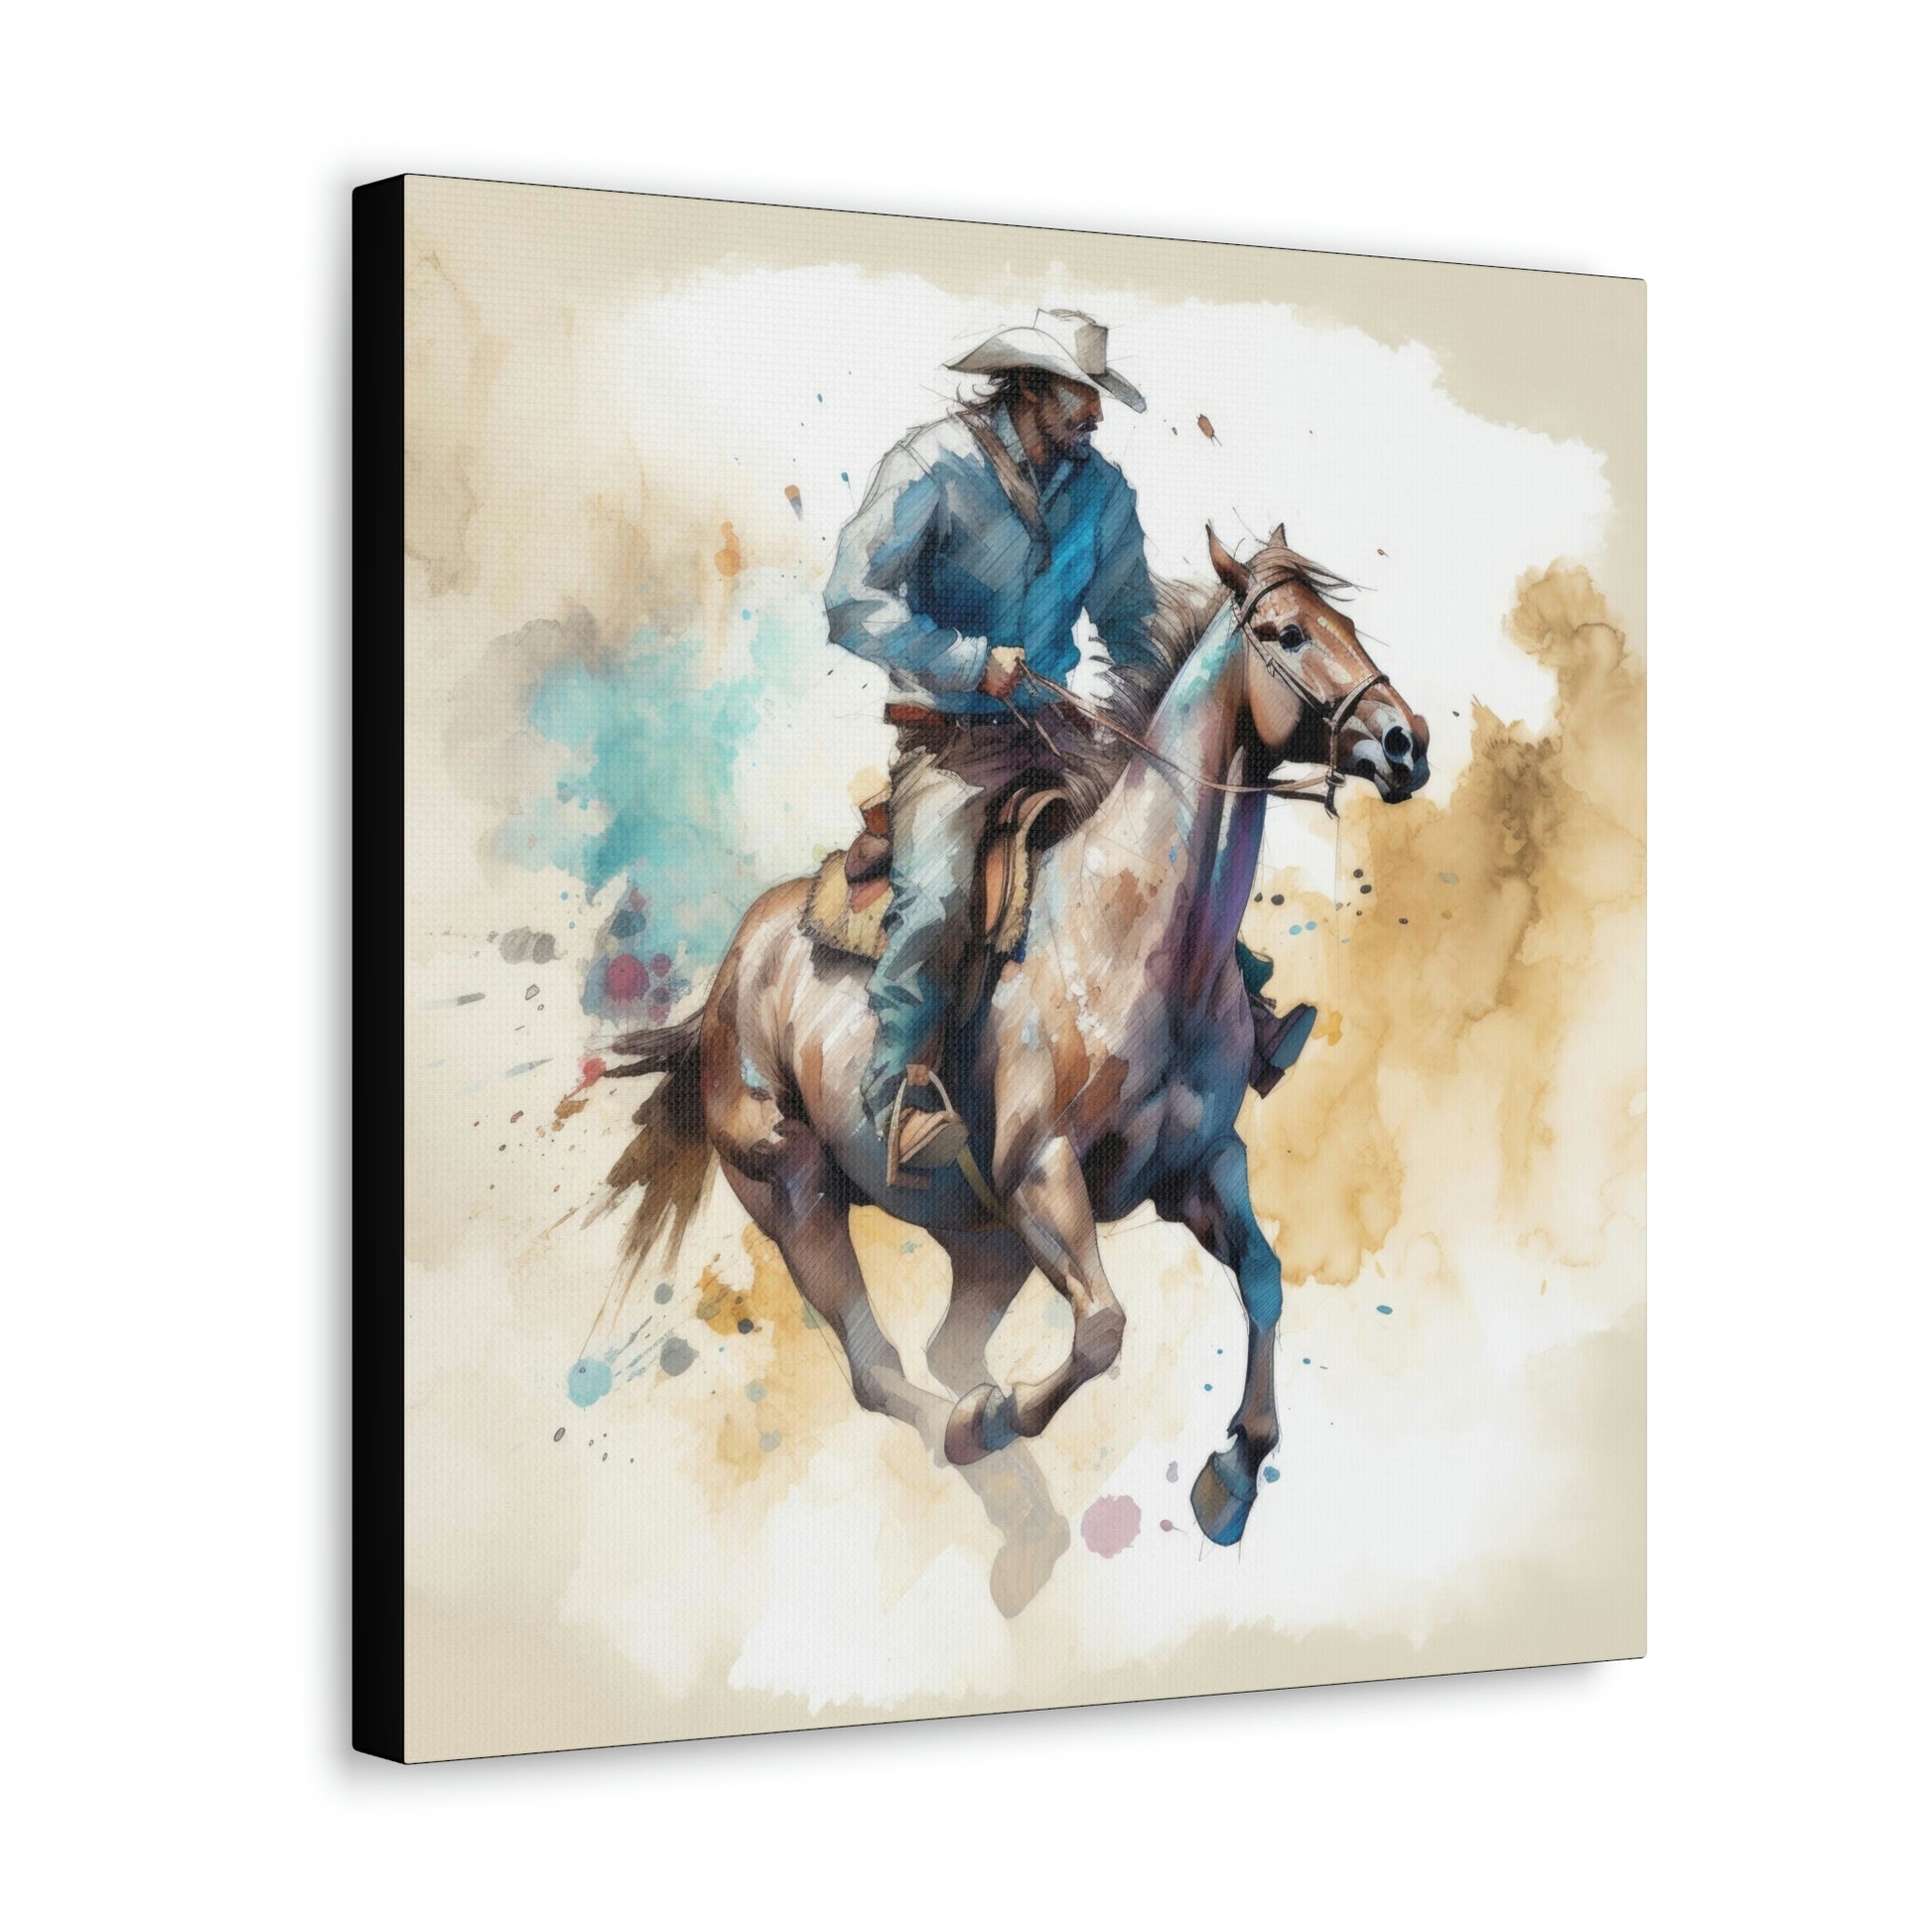 Cowboy riding bronc canvas wall art, cowboy with horse canvas decor, western canvas decor, rustic wall art with cowboy on horse, cowboy art print on canvas 